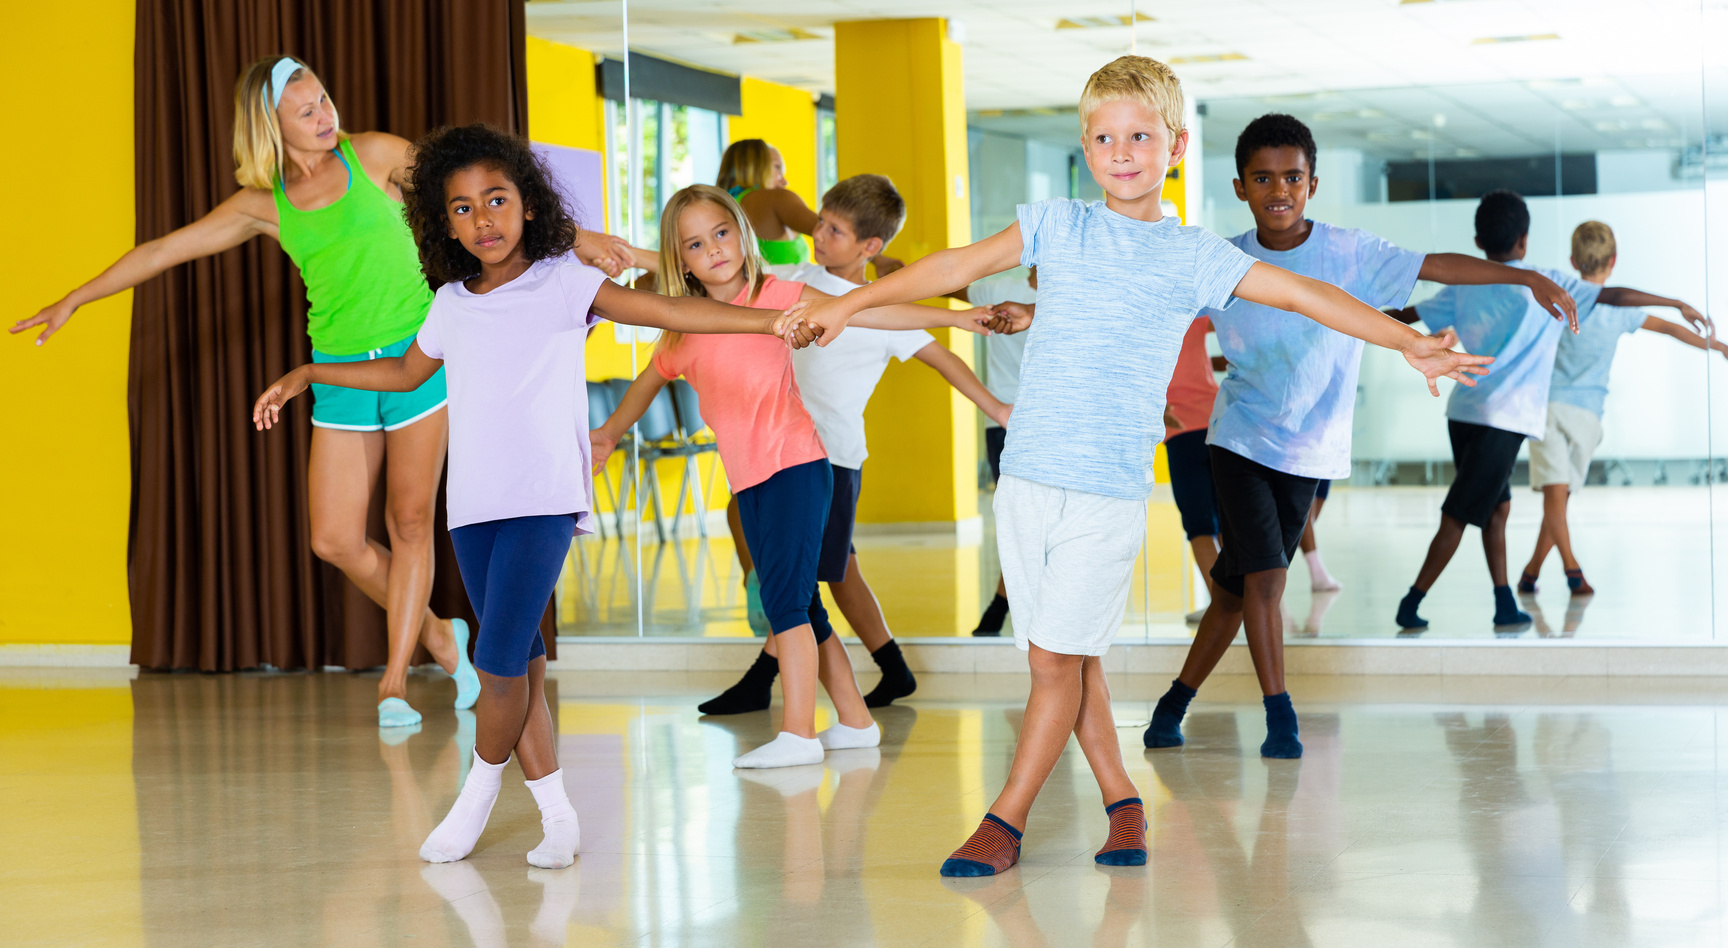 Children learn dance movements in dance class